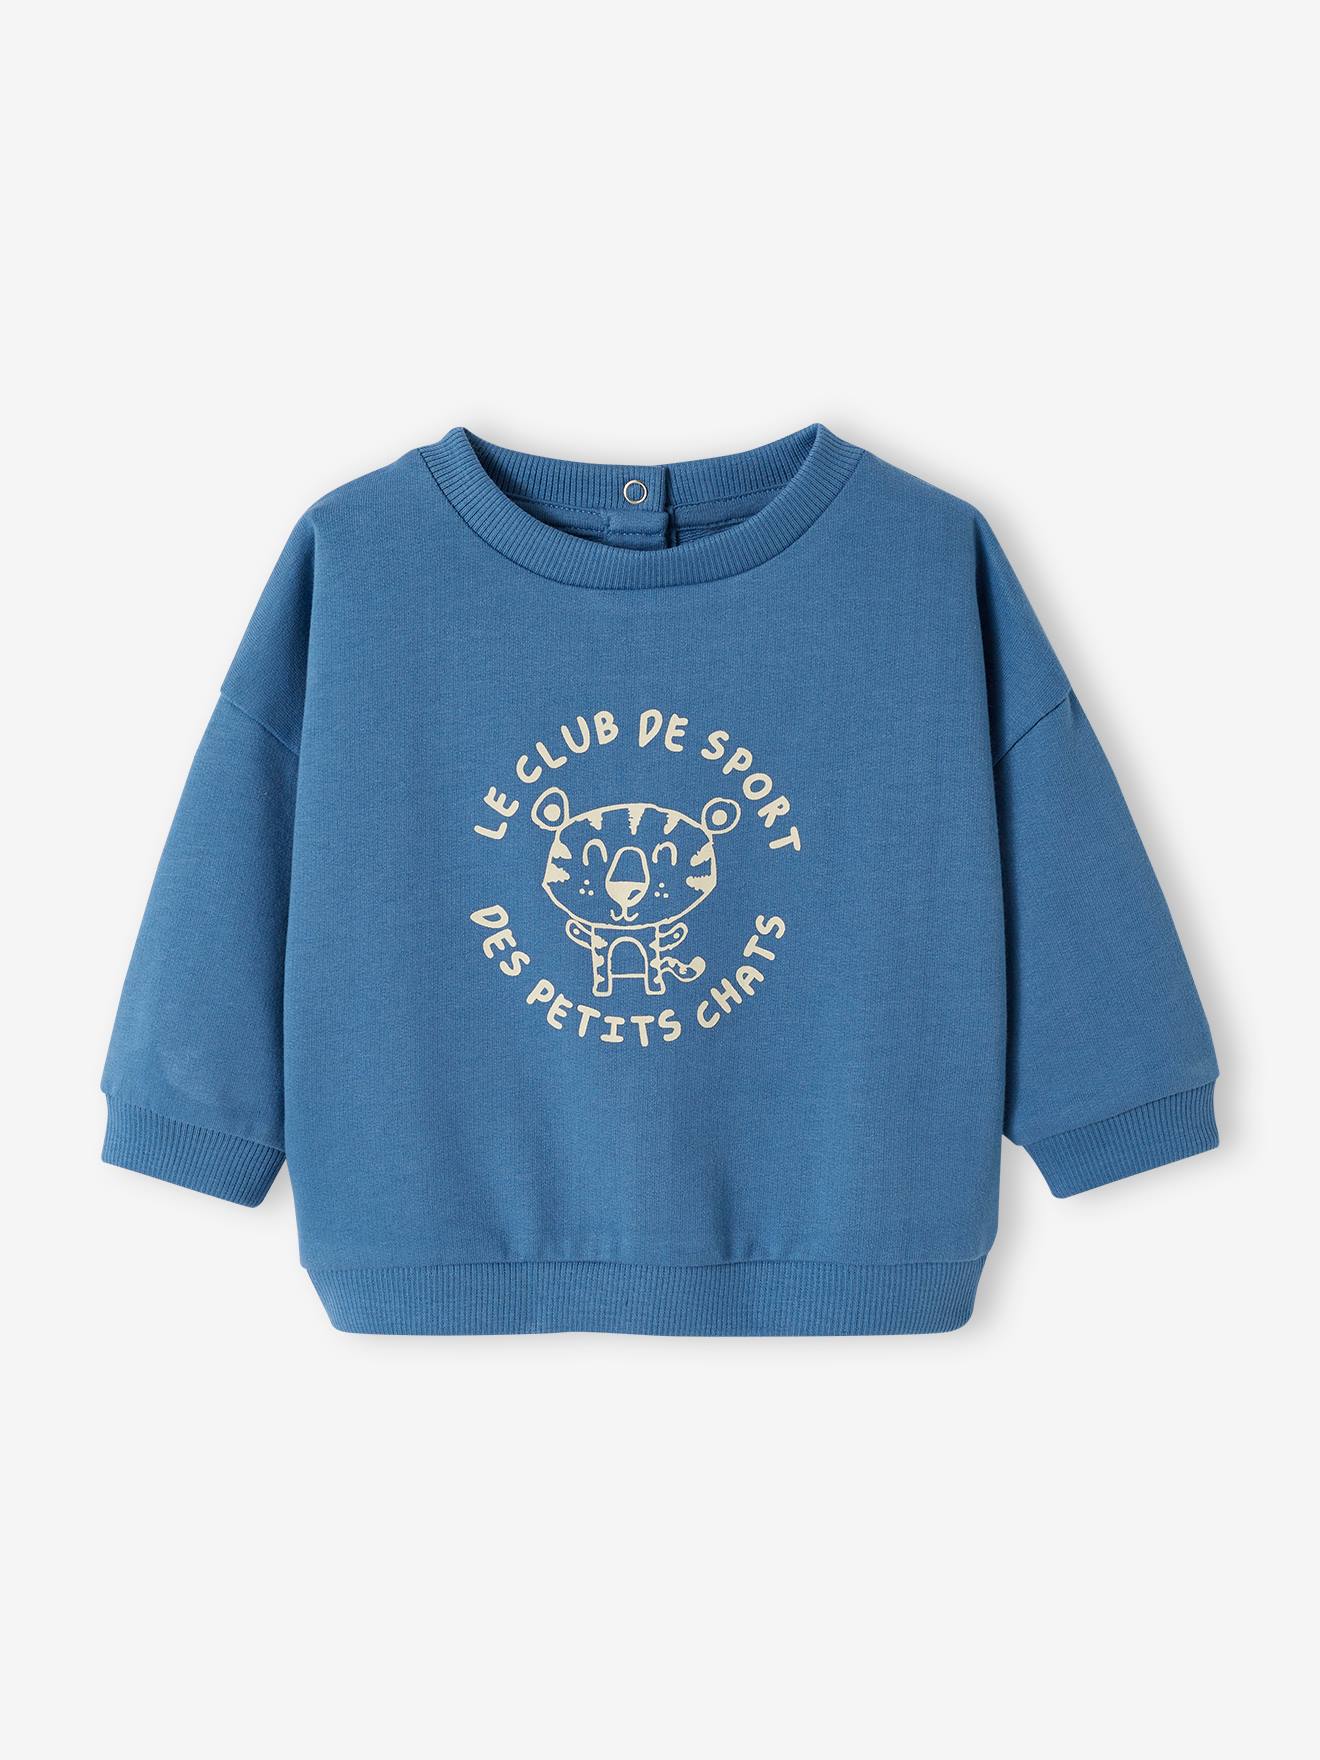 Basics Sweatshirt in Fleece for Babies blue